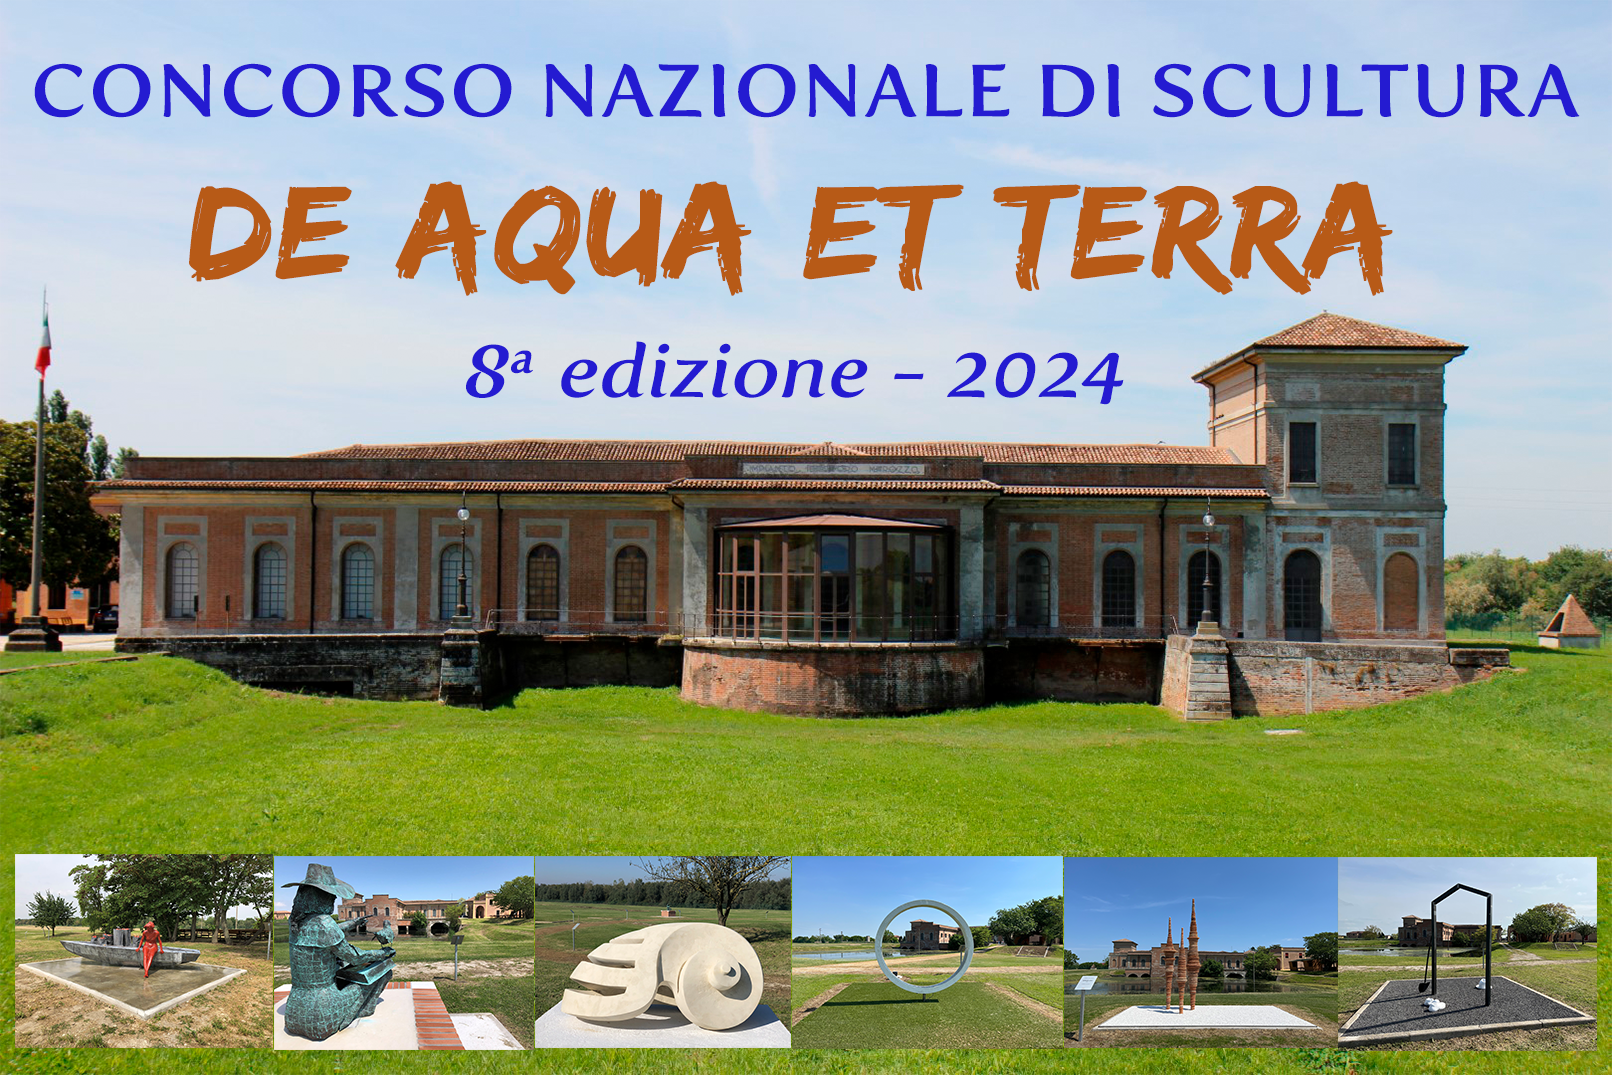 Concorso Nazionale di Scultura "De Aqua et Terra" 2024